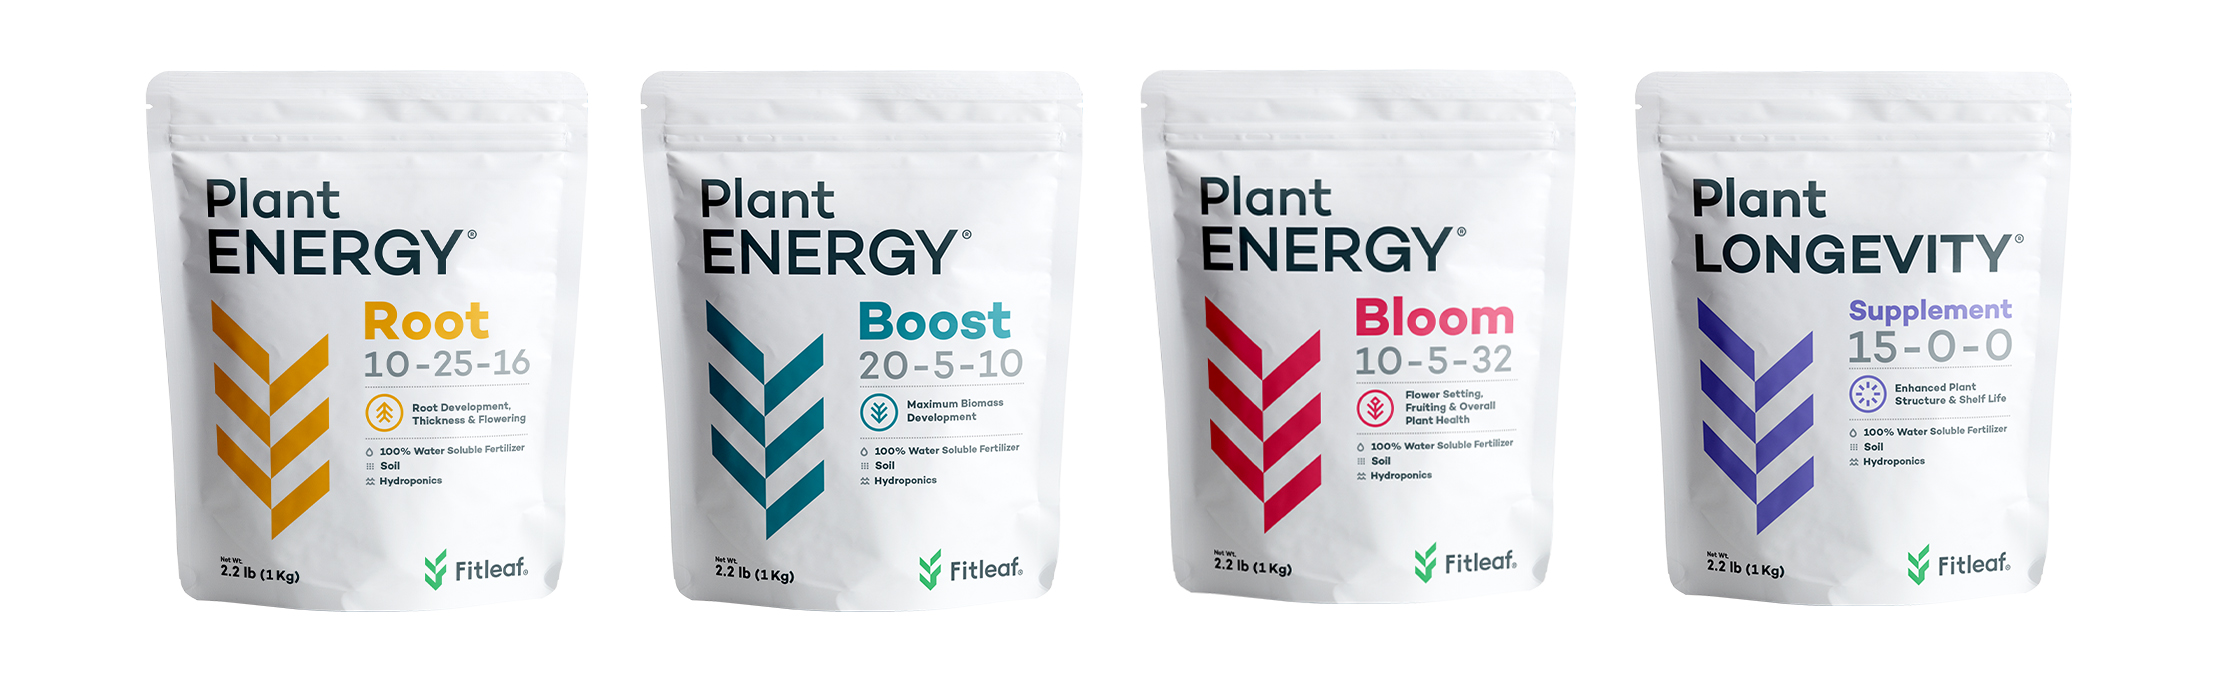 Plant ENERGY Brand Line